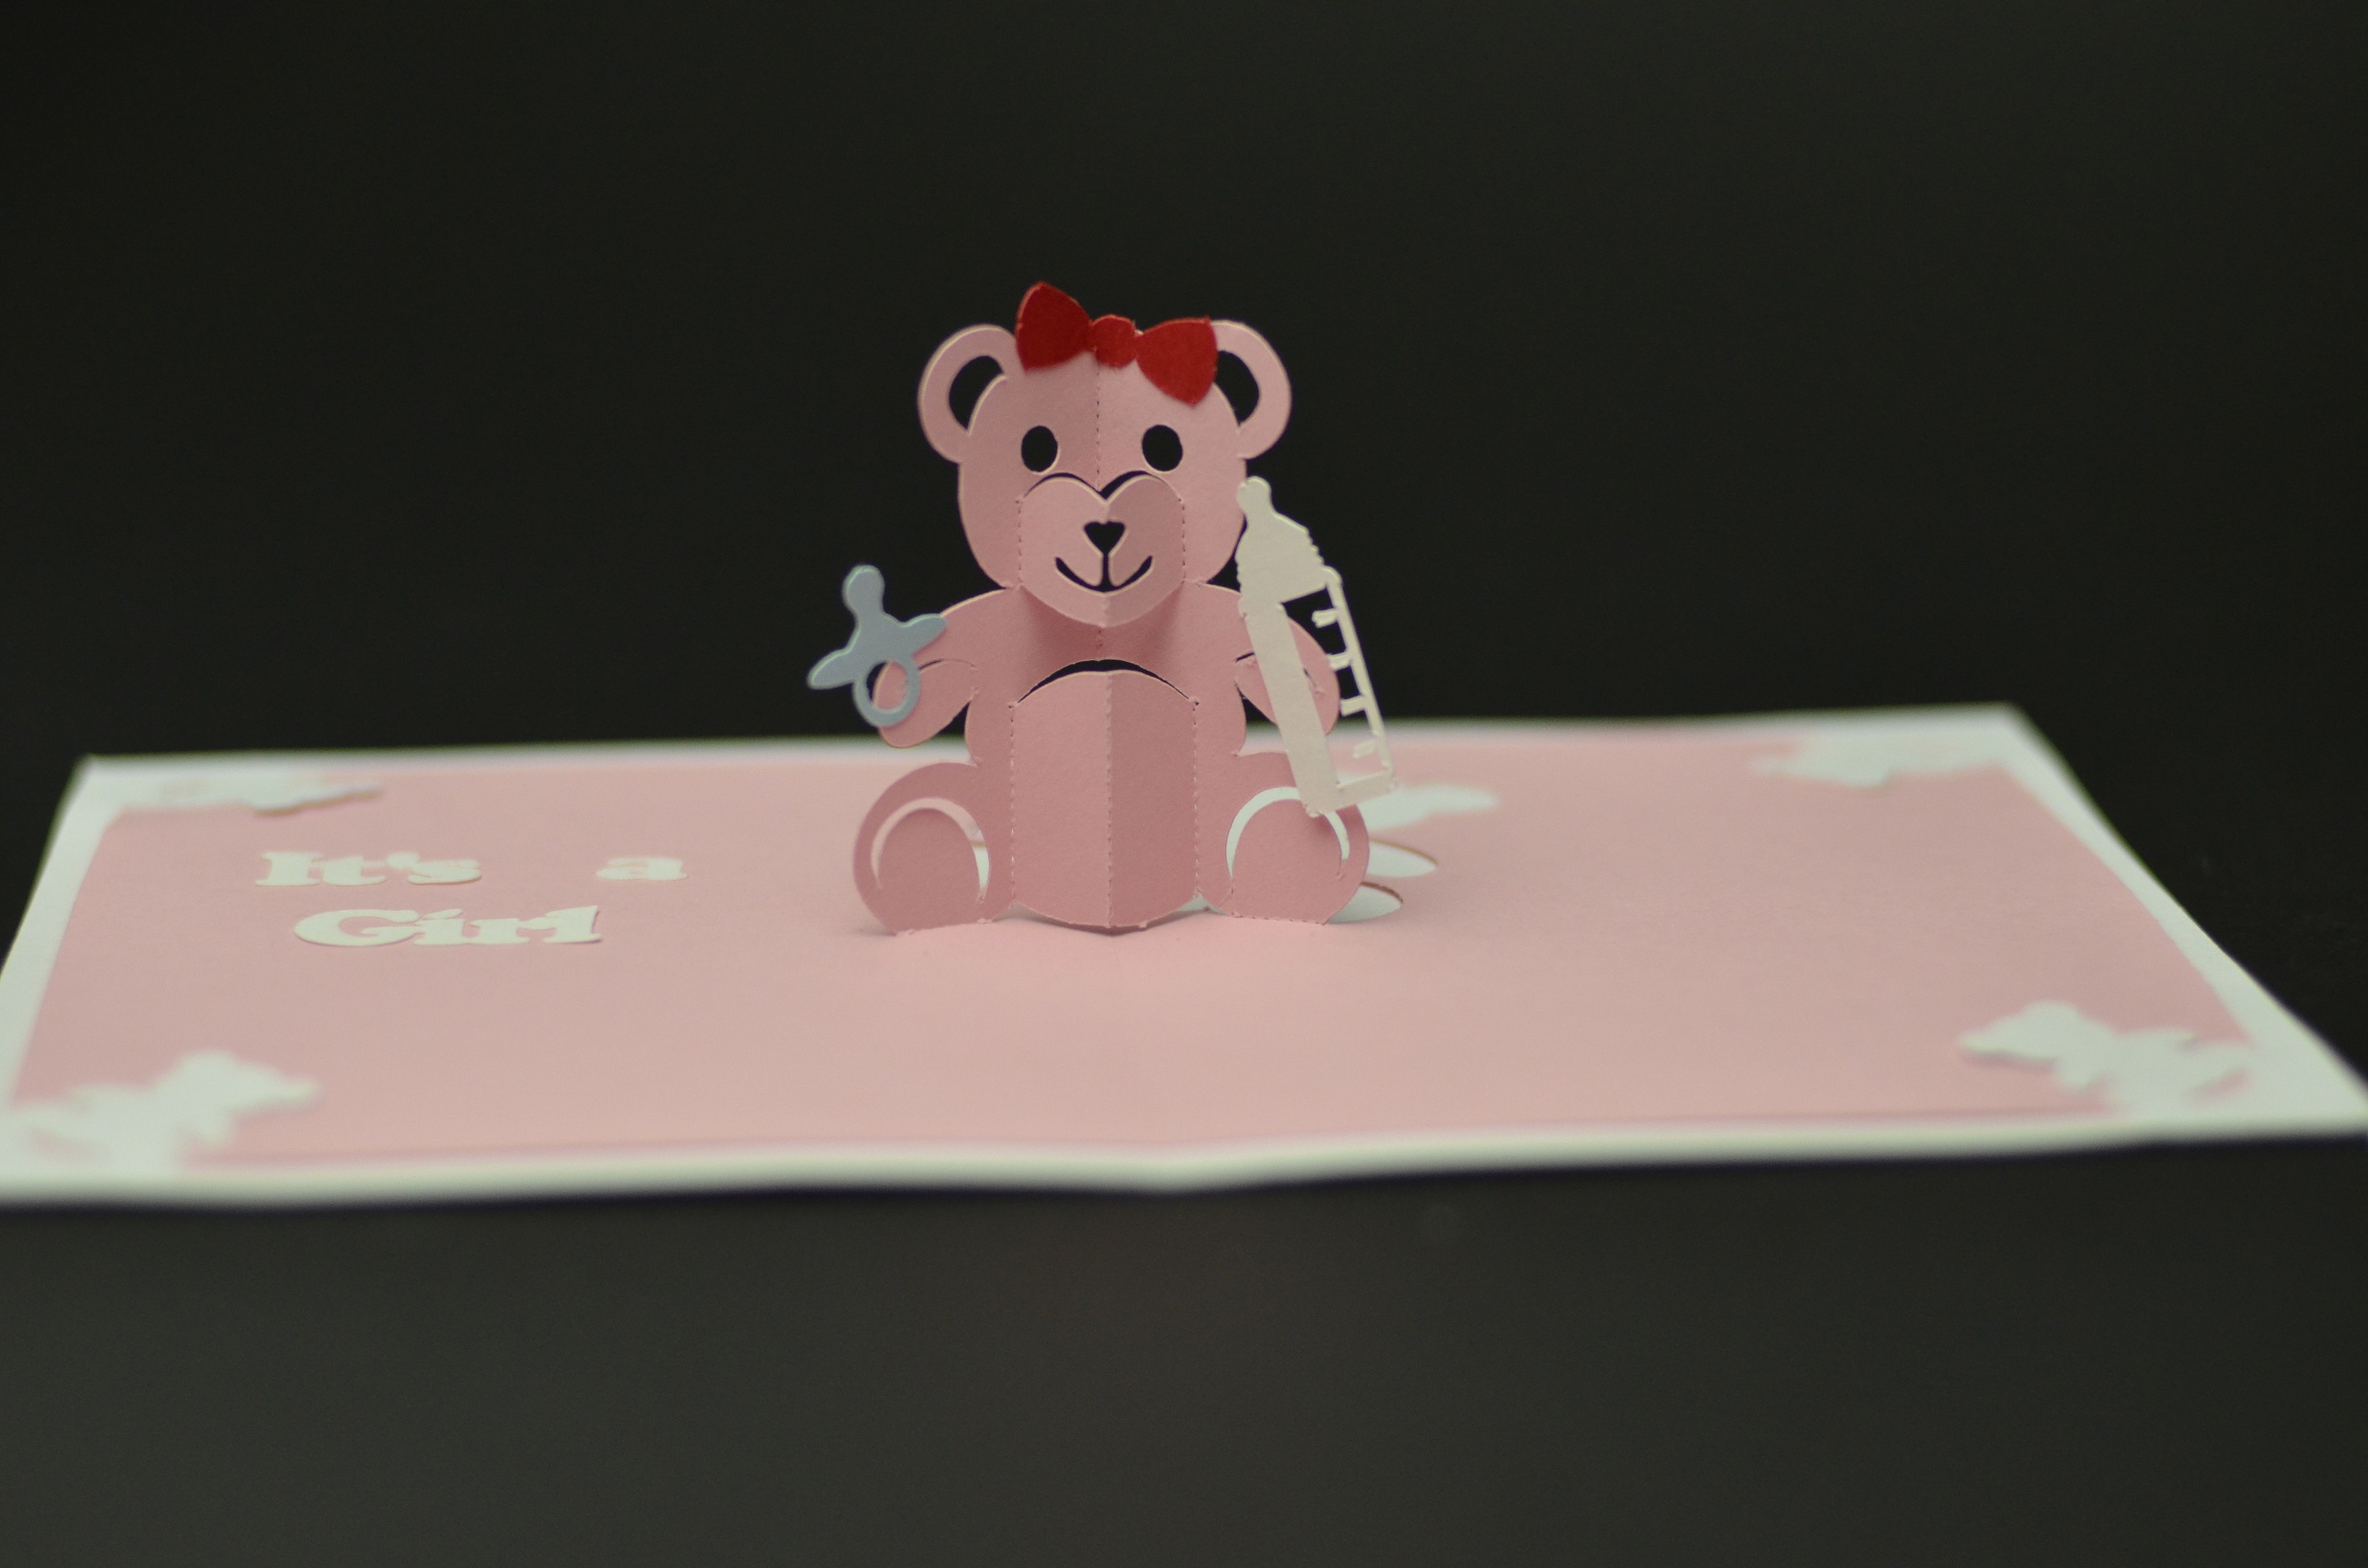 chocoviolet: how to make teddy bear pop up card Regarding Teddy Bear Pop Up Card Template Free